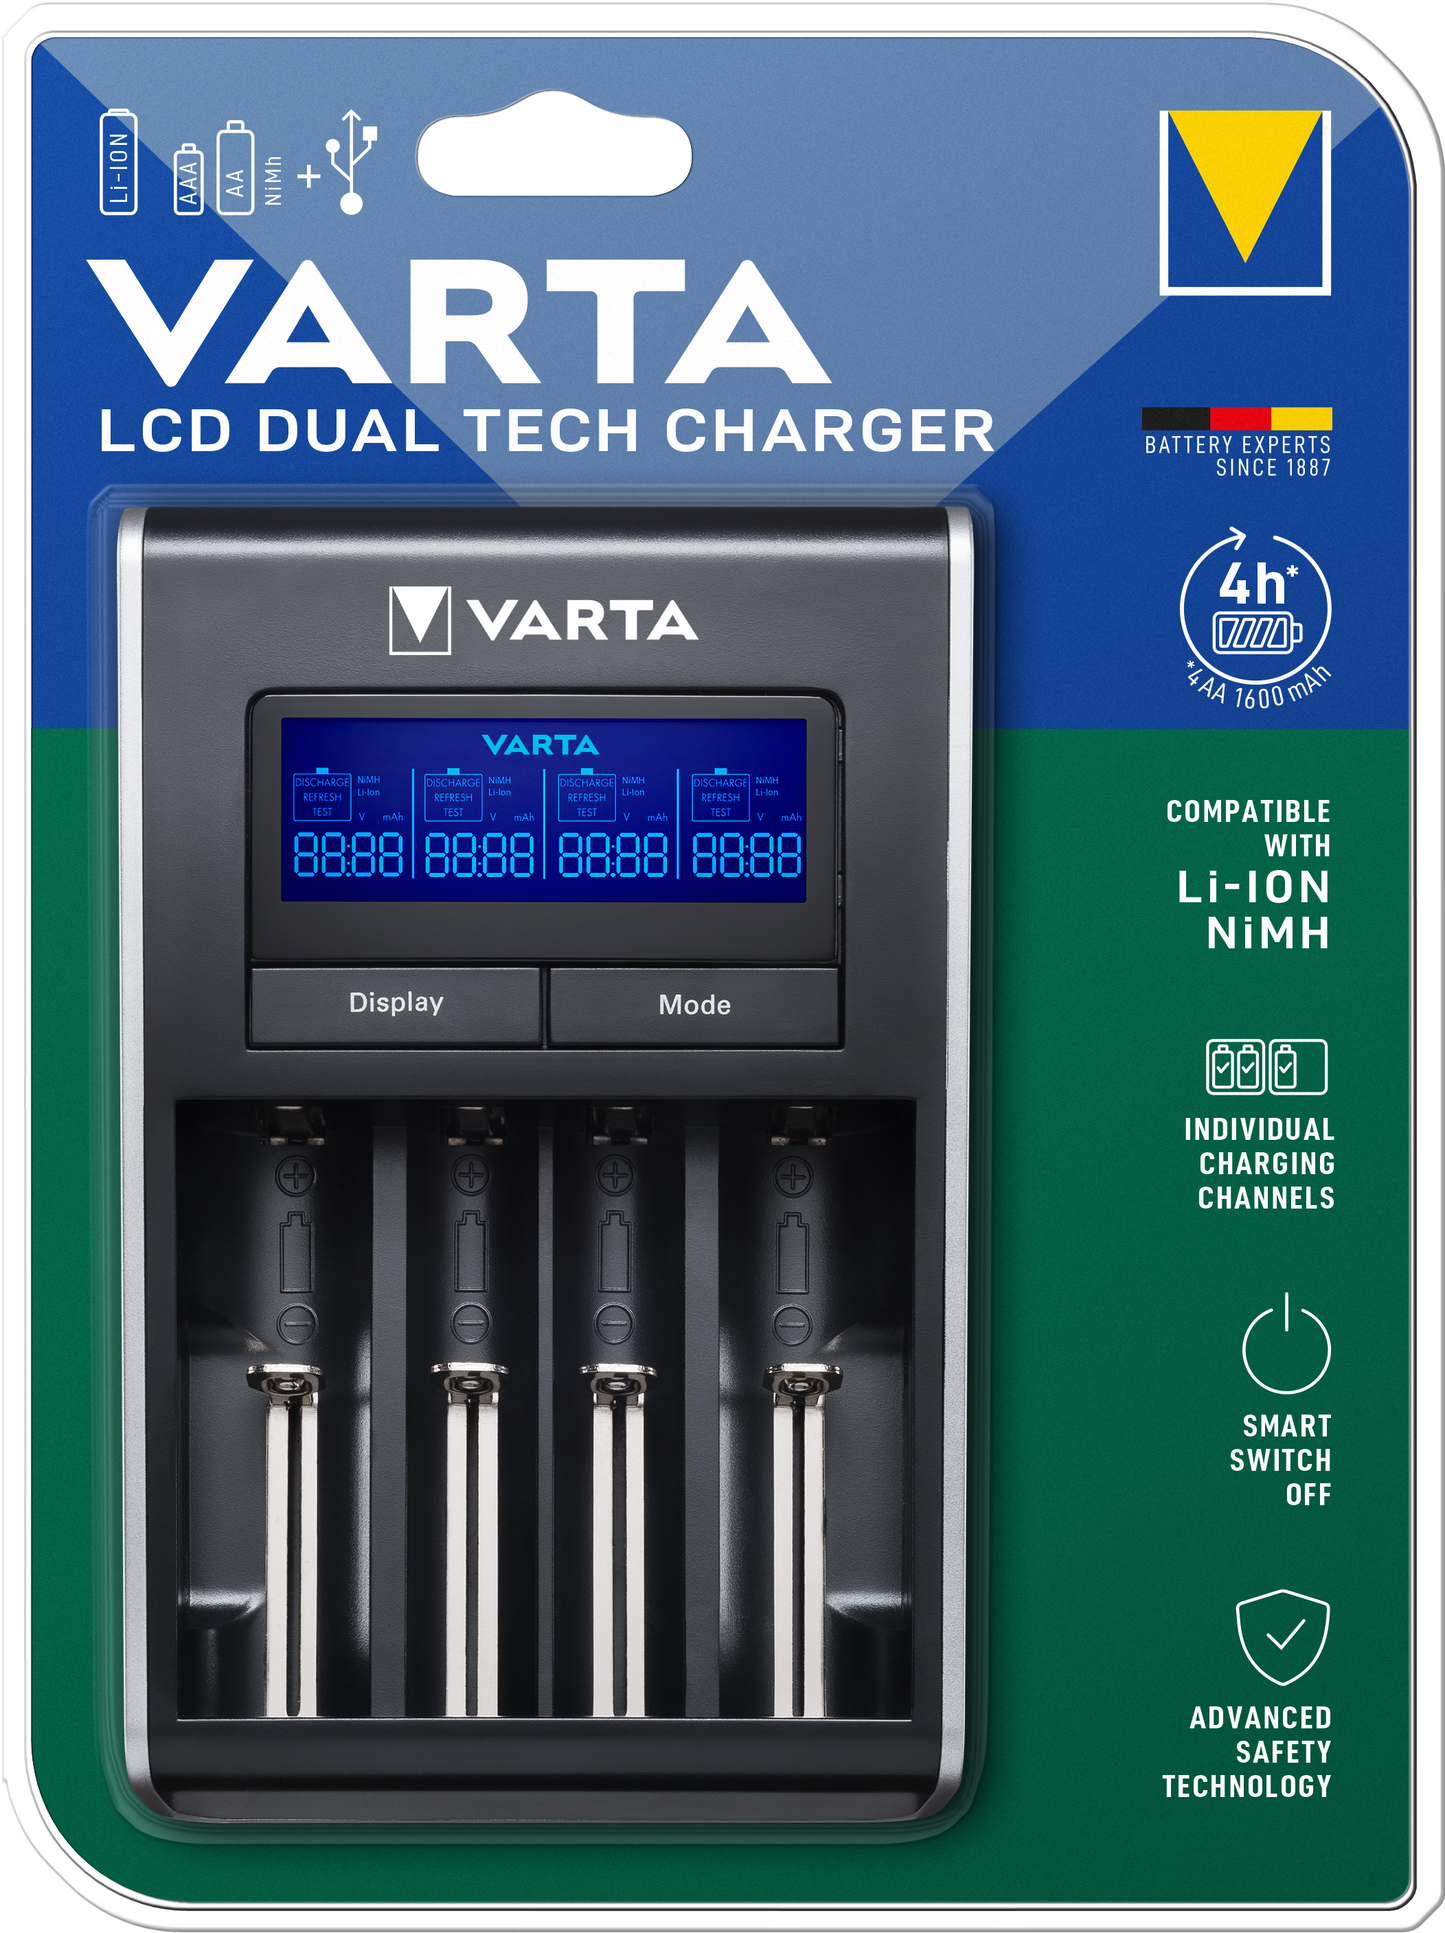 Varta - LCD Lithium 18650 Charger